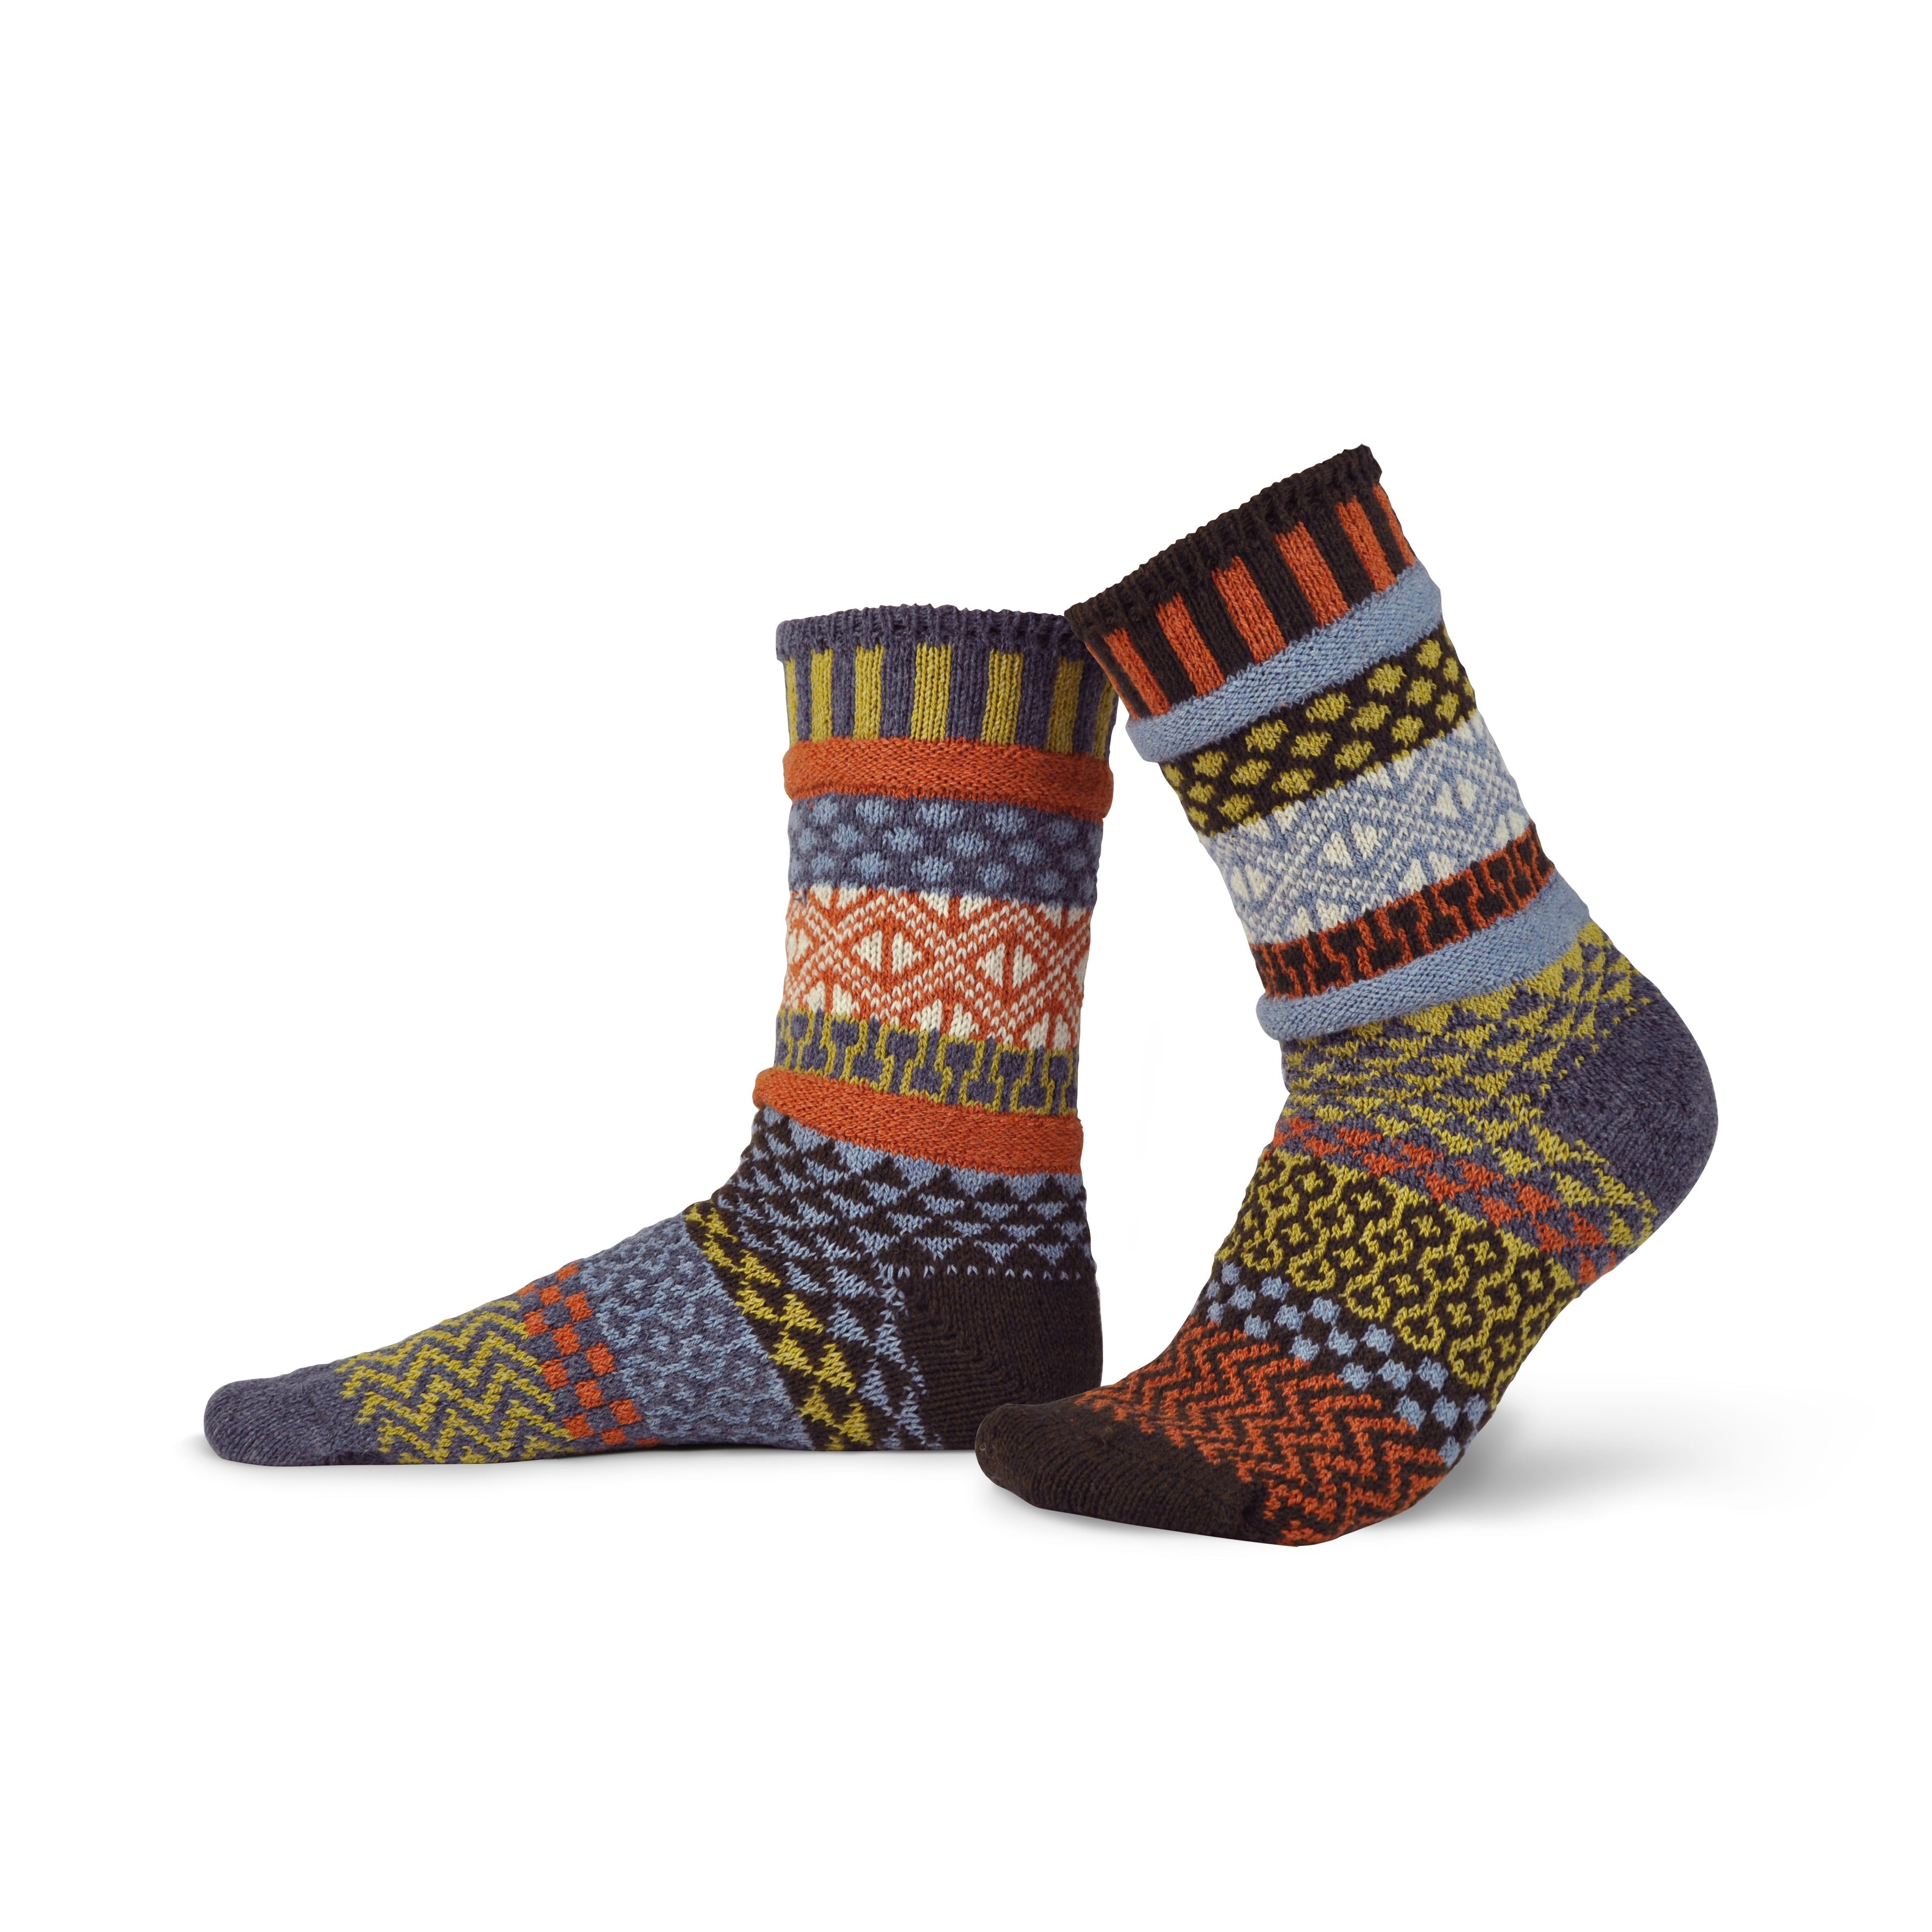 Solmate | Adult Wool Blend Crew Socks - Ponderosa, Socks, Solmate, Defiance Outdoor Gear Co.